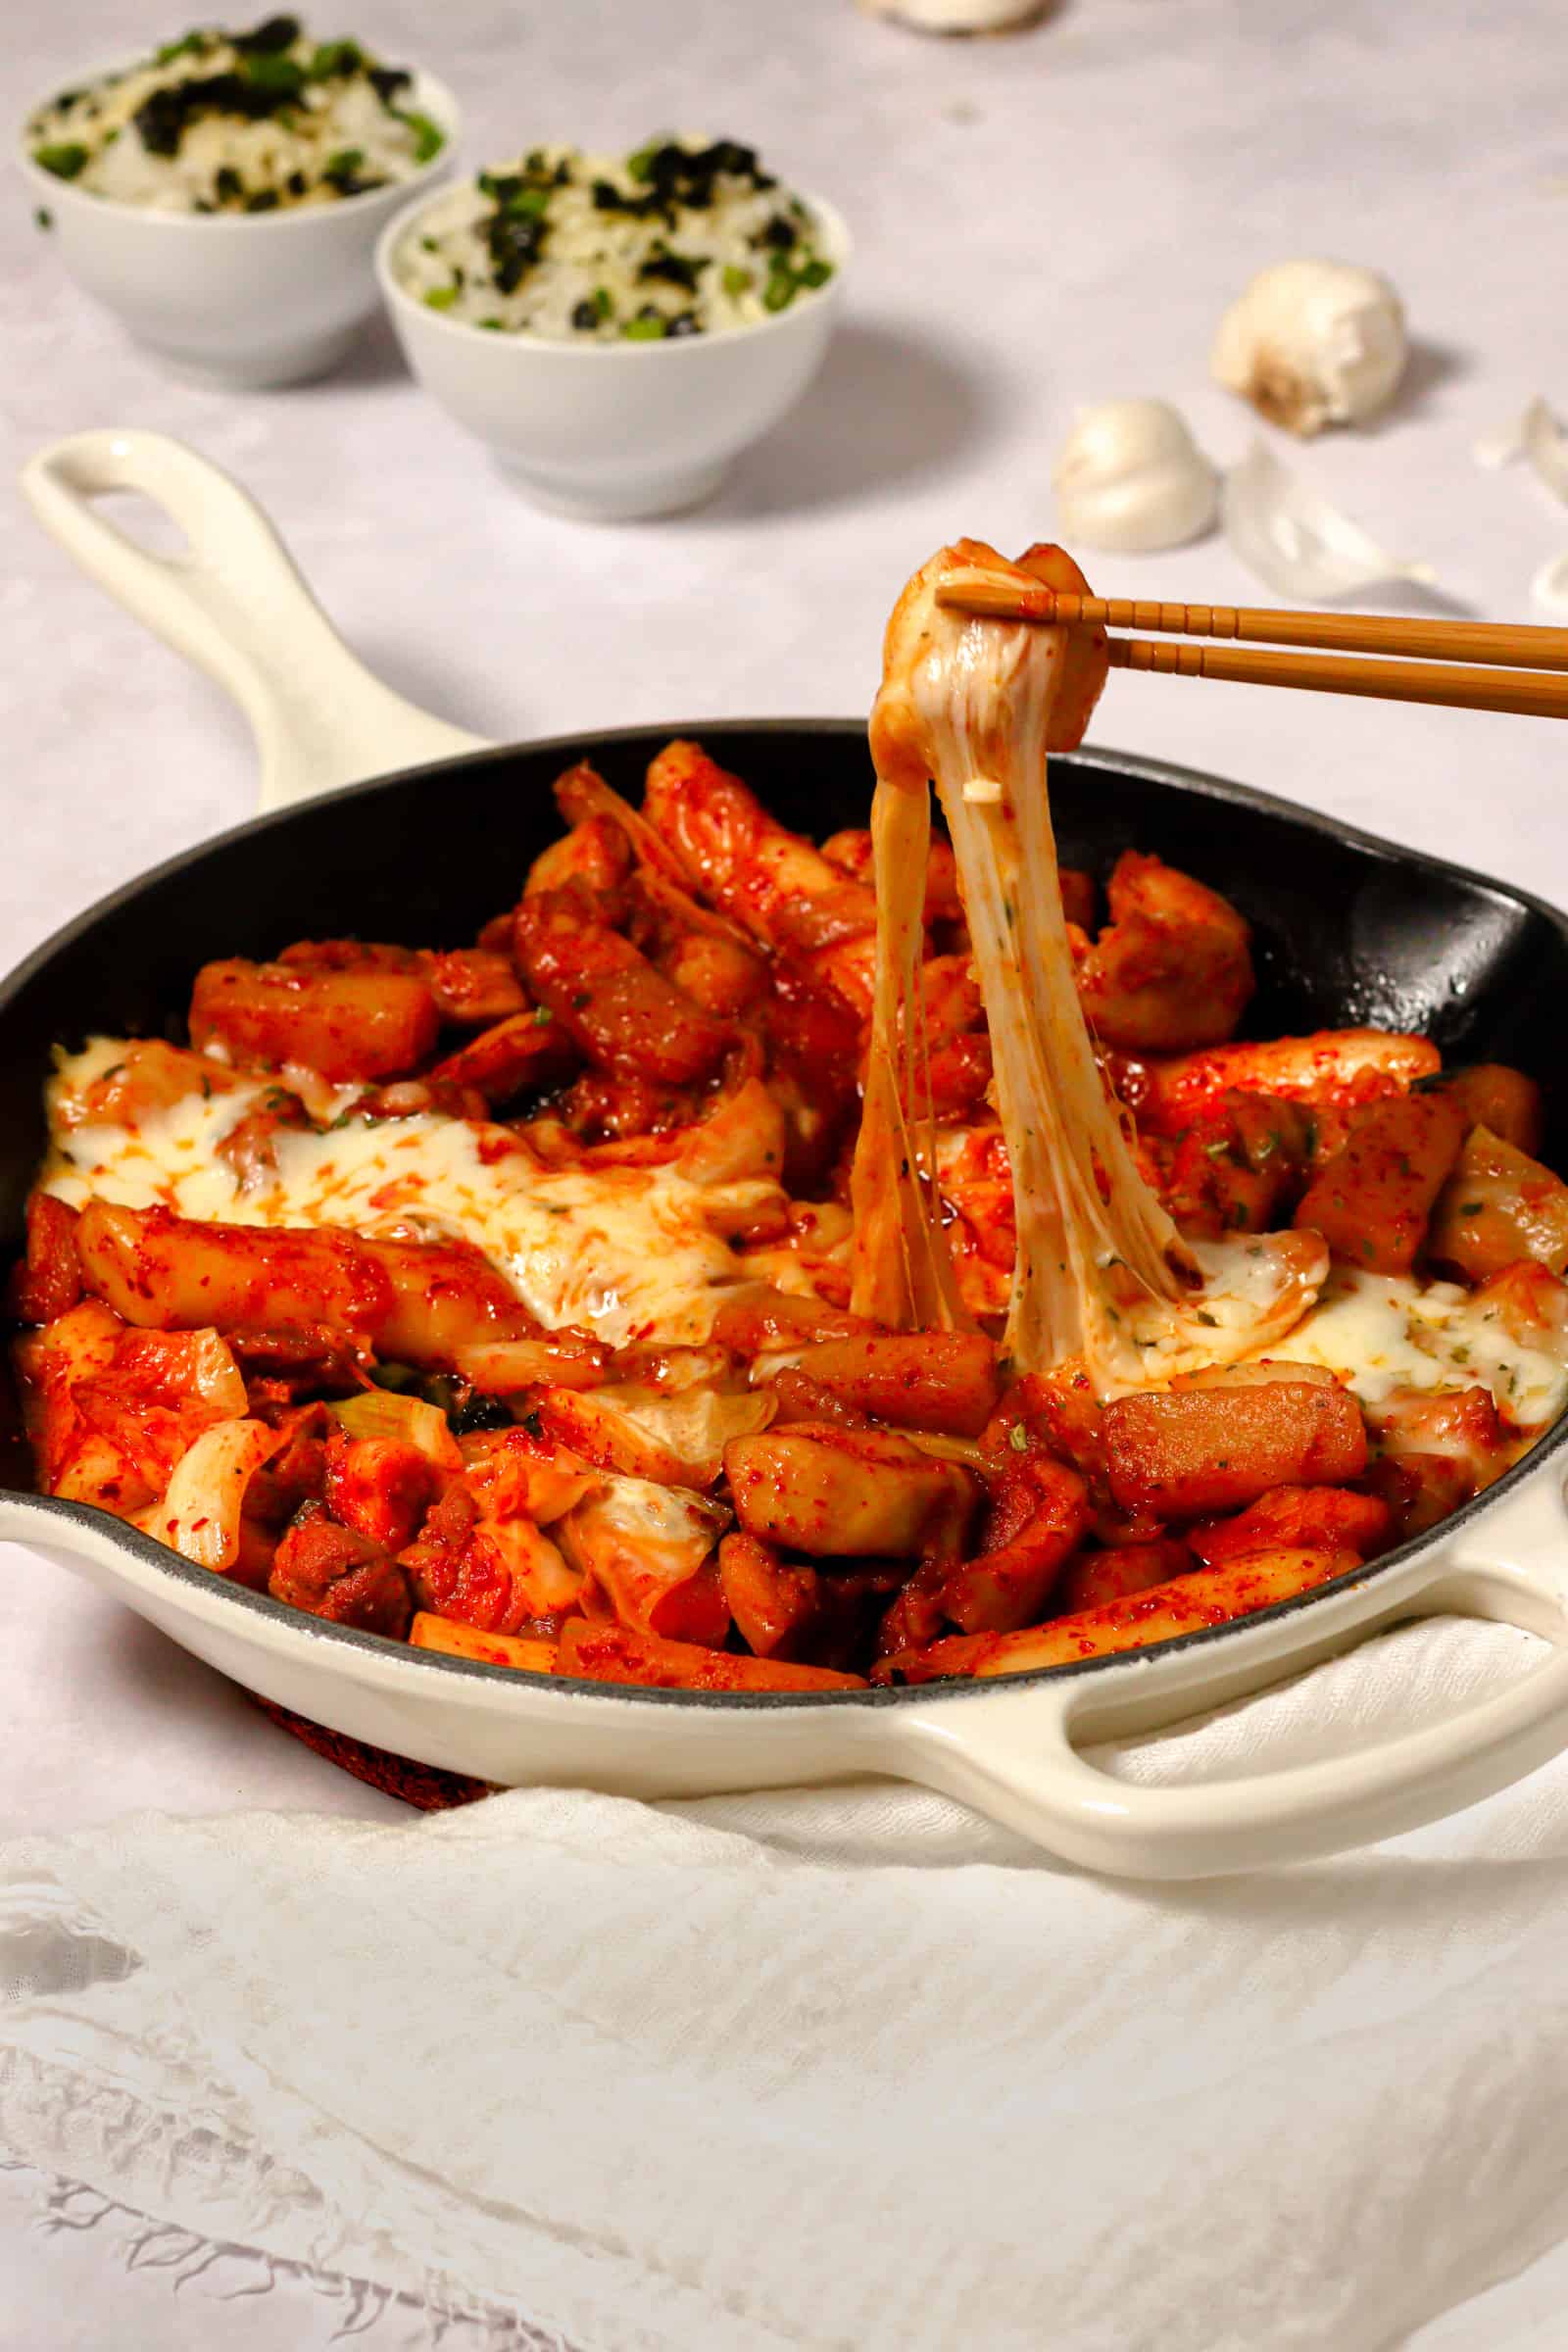 dakgalbi korean spicy chicken stir fry with Korean sweet potatoes, green cabbage, rice cakes and kkaennip